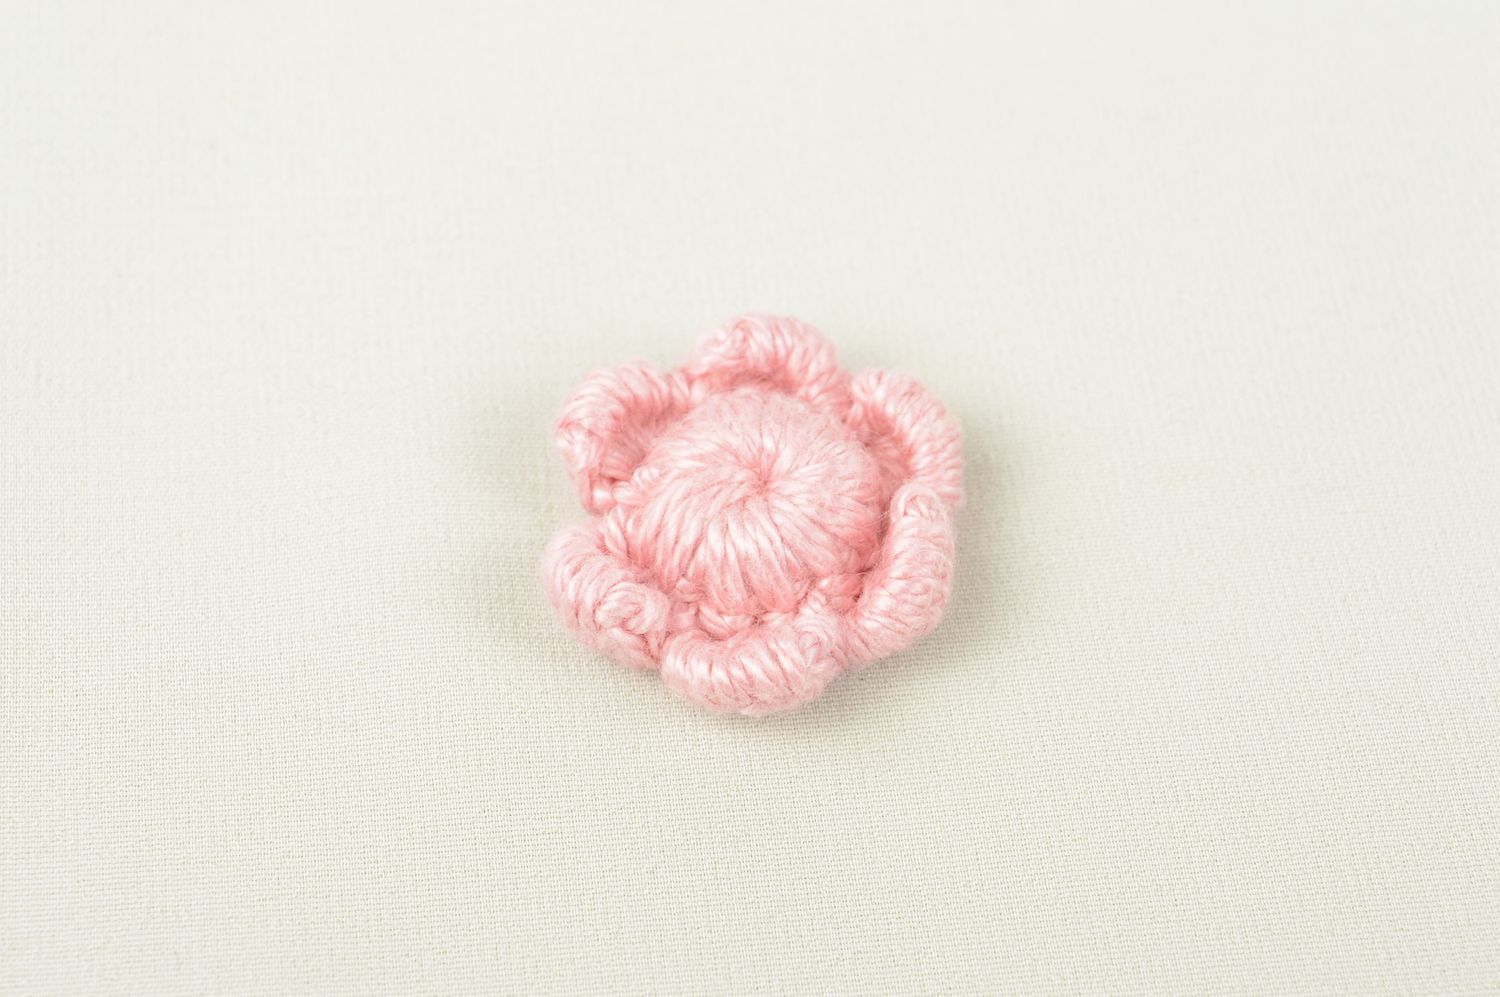 Handmade crocheted flower unusual pink brooch stylish designer fittings photo 1